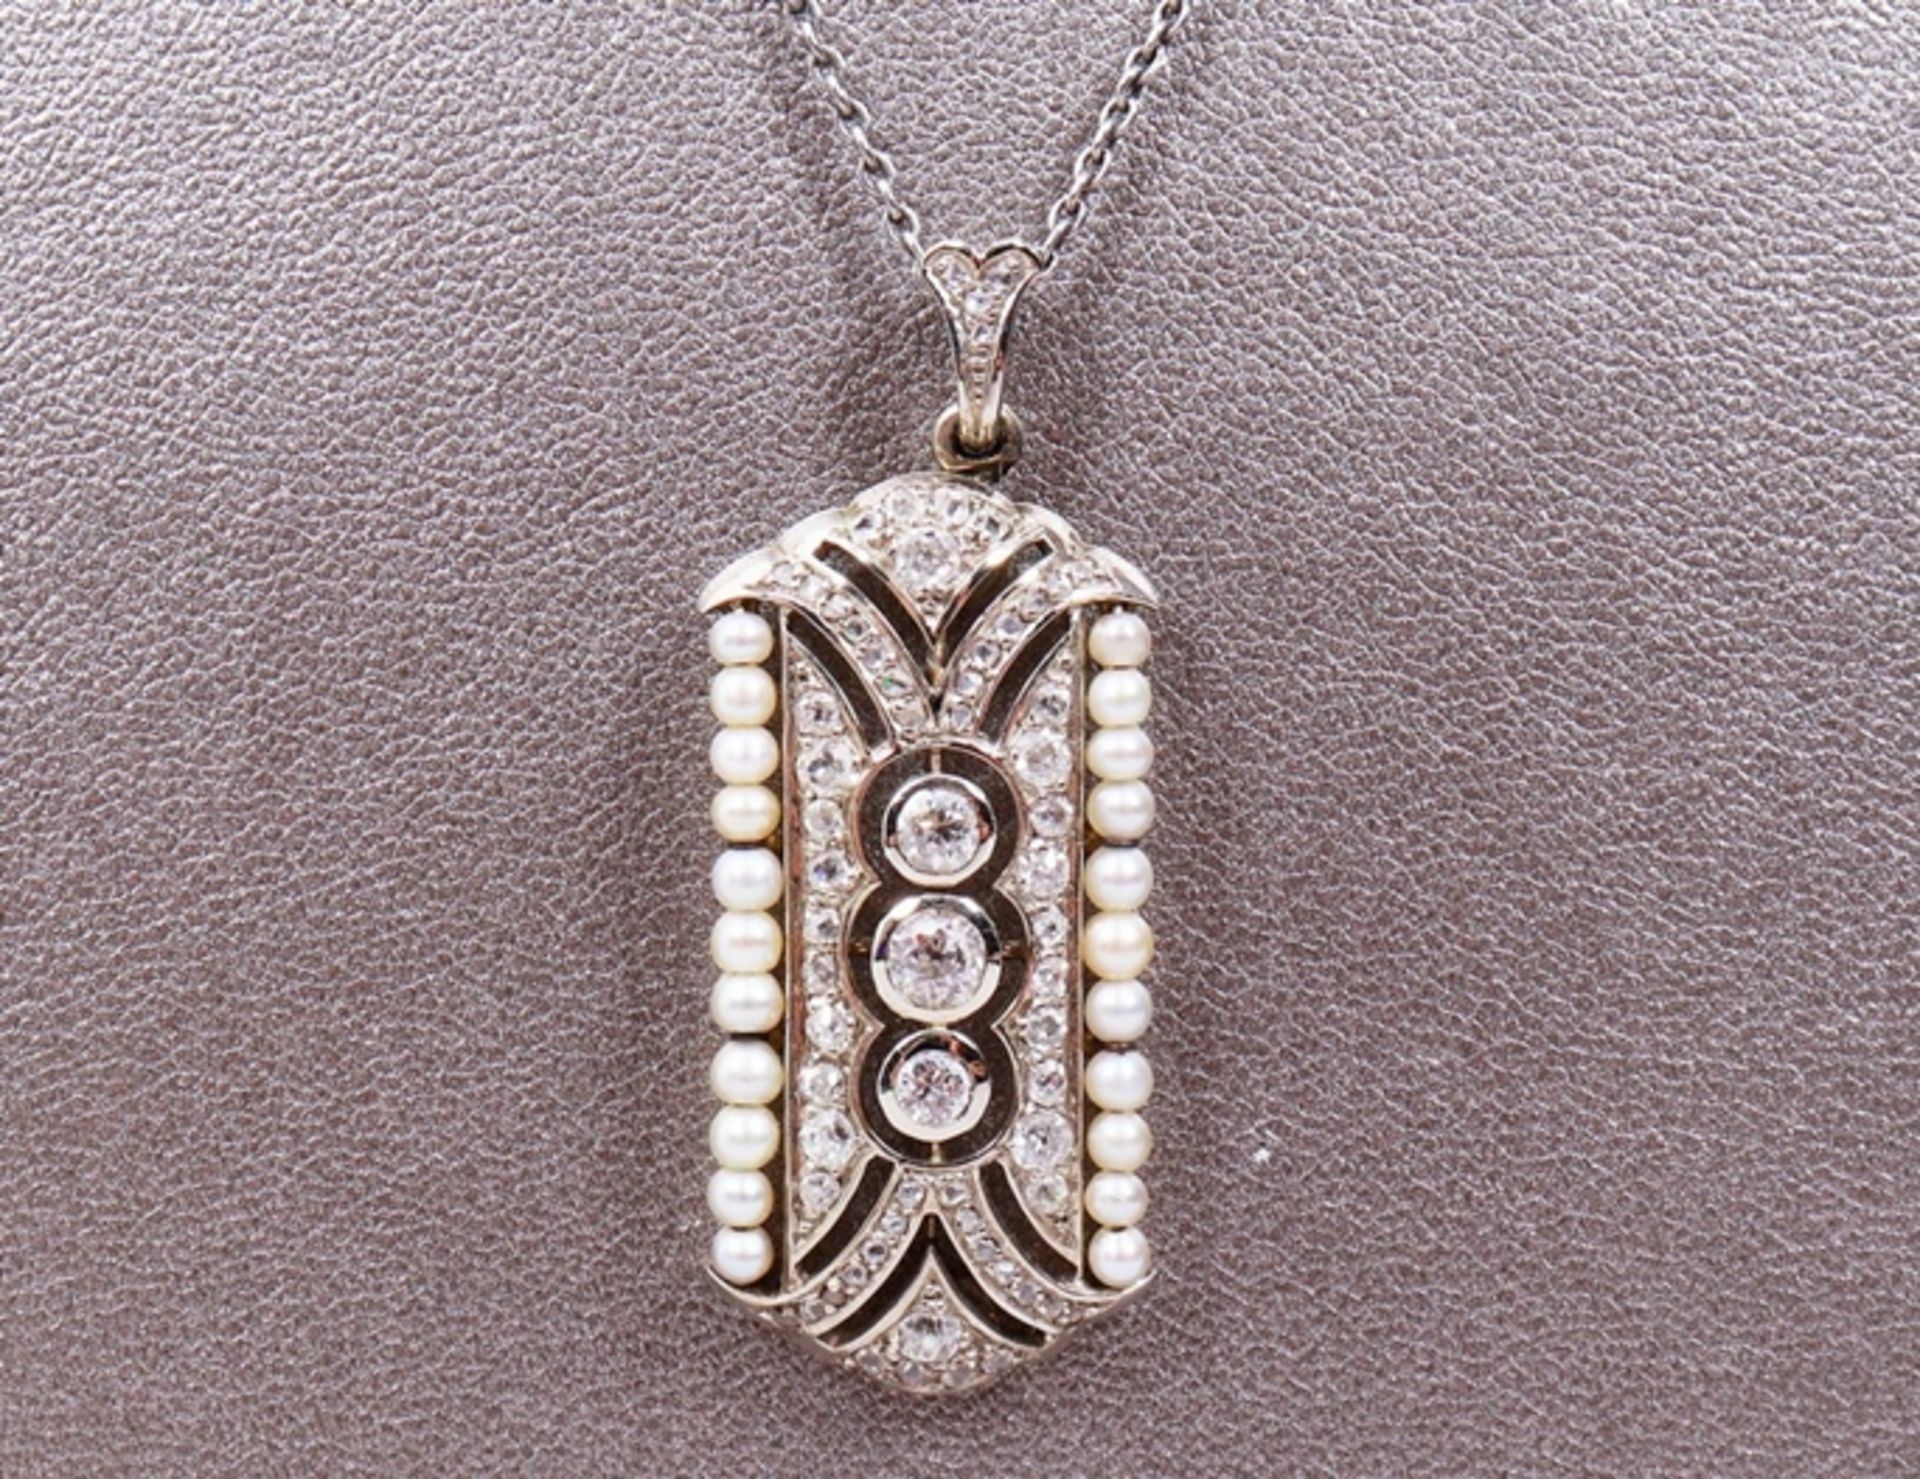 Art Deco pendant on chain - Image 2 of 3